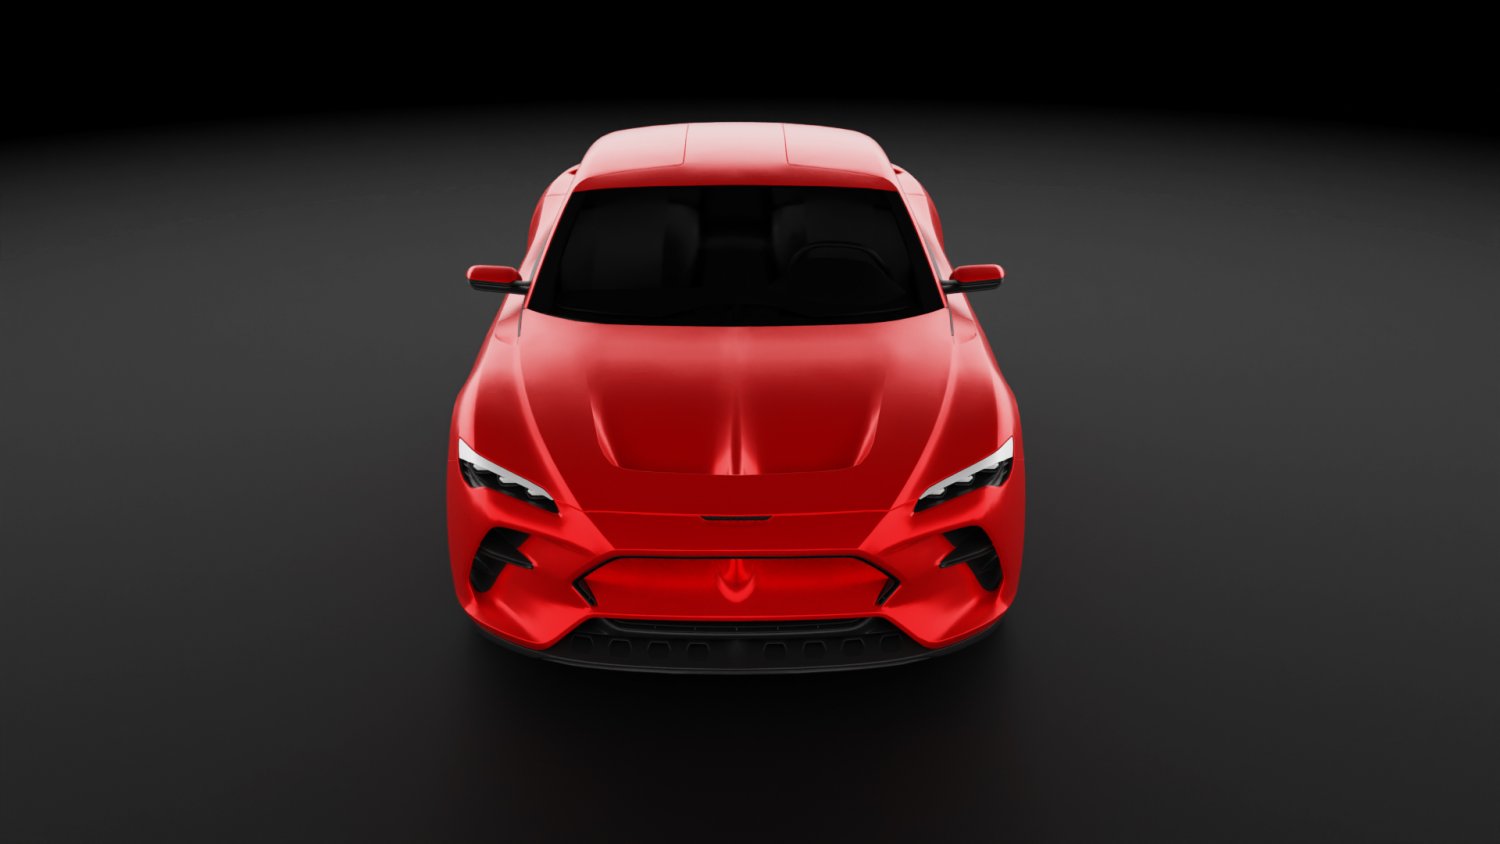 Italdesign Davinci Asphalt 9 3D Model in Sport Cars 3DExport